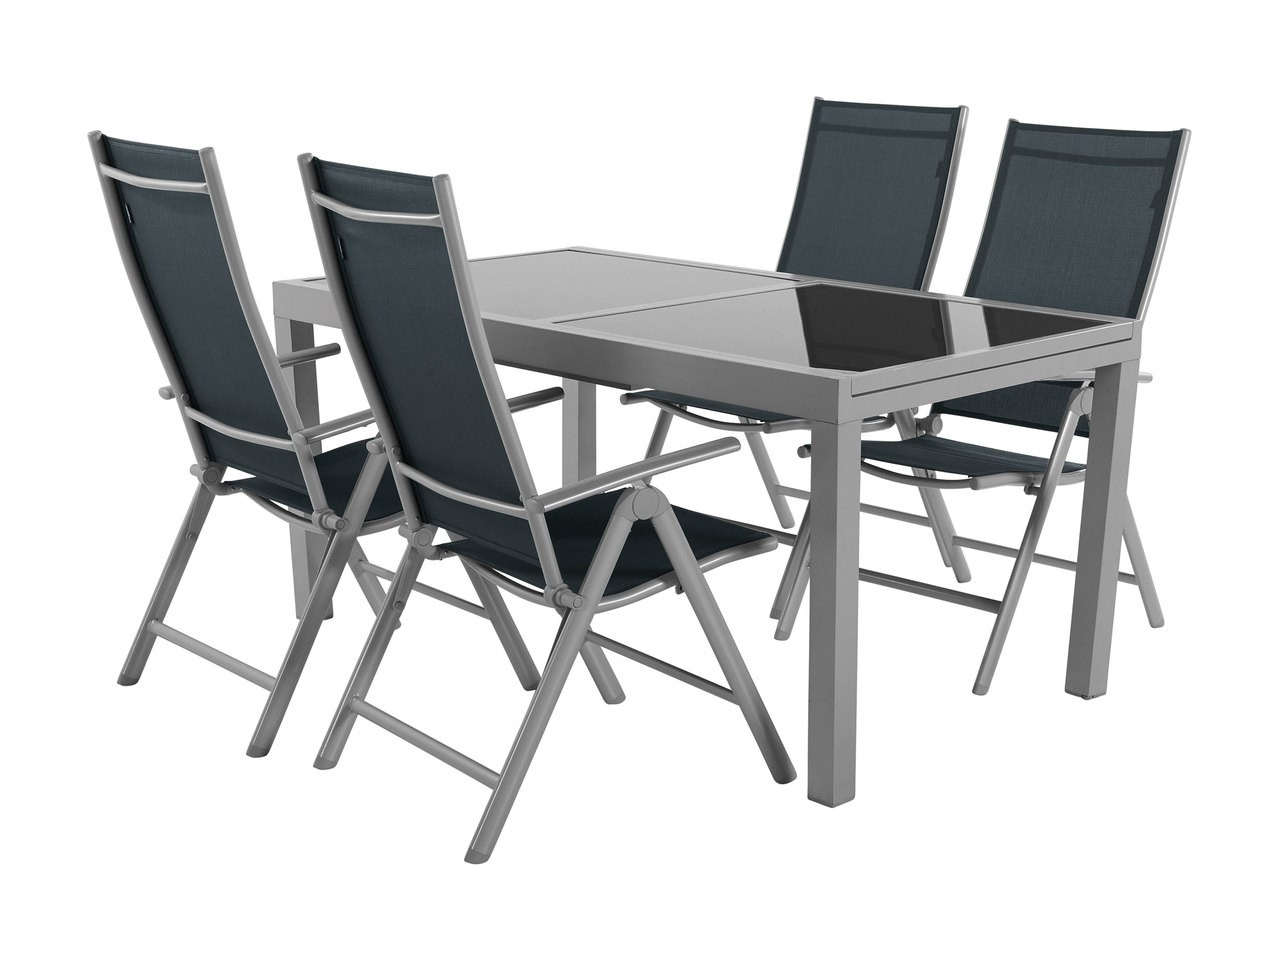 Florabest Aluminium Folding Chair1